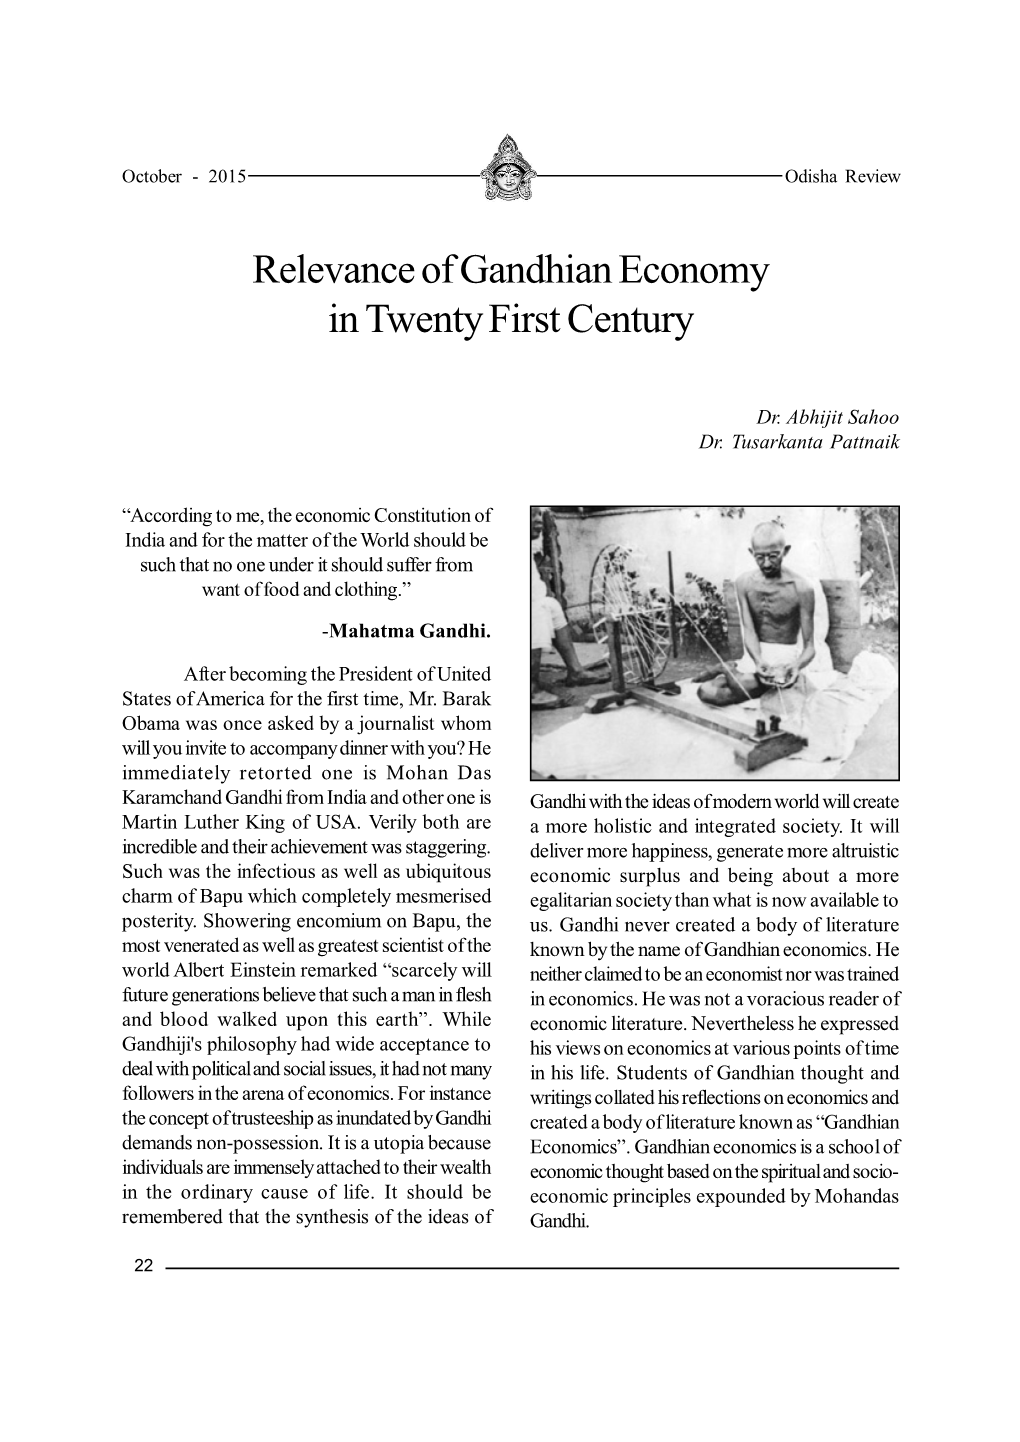 Relevance of Gandhian Economy in Twenty First Century